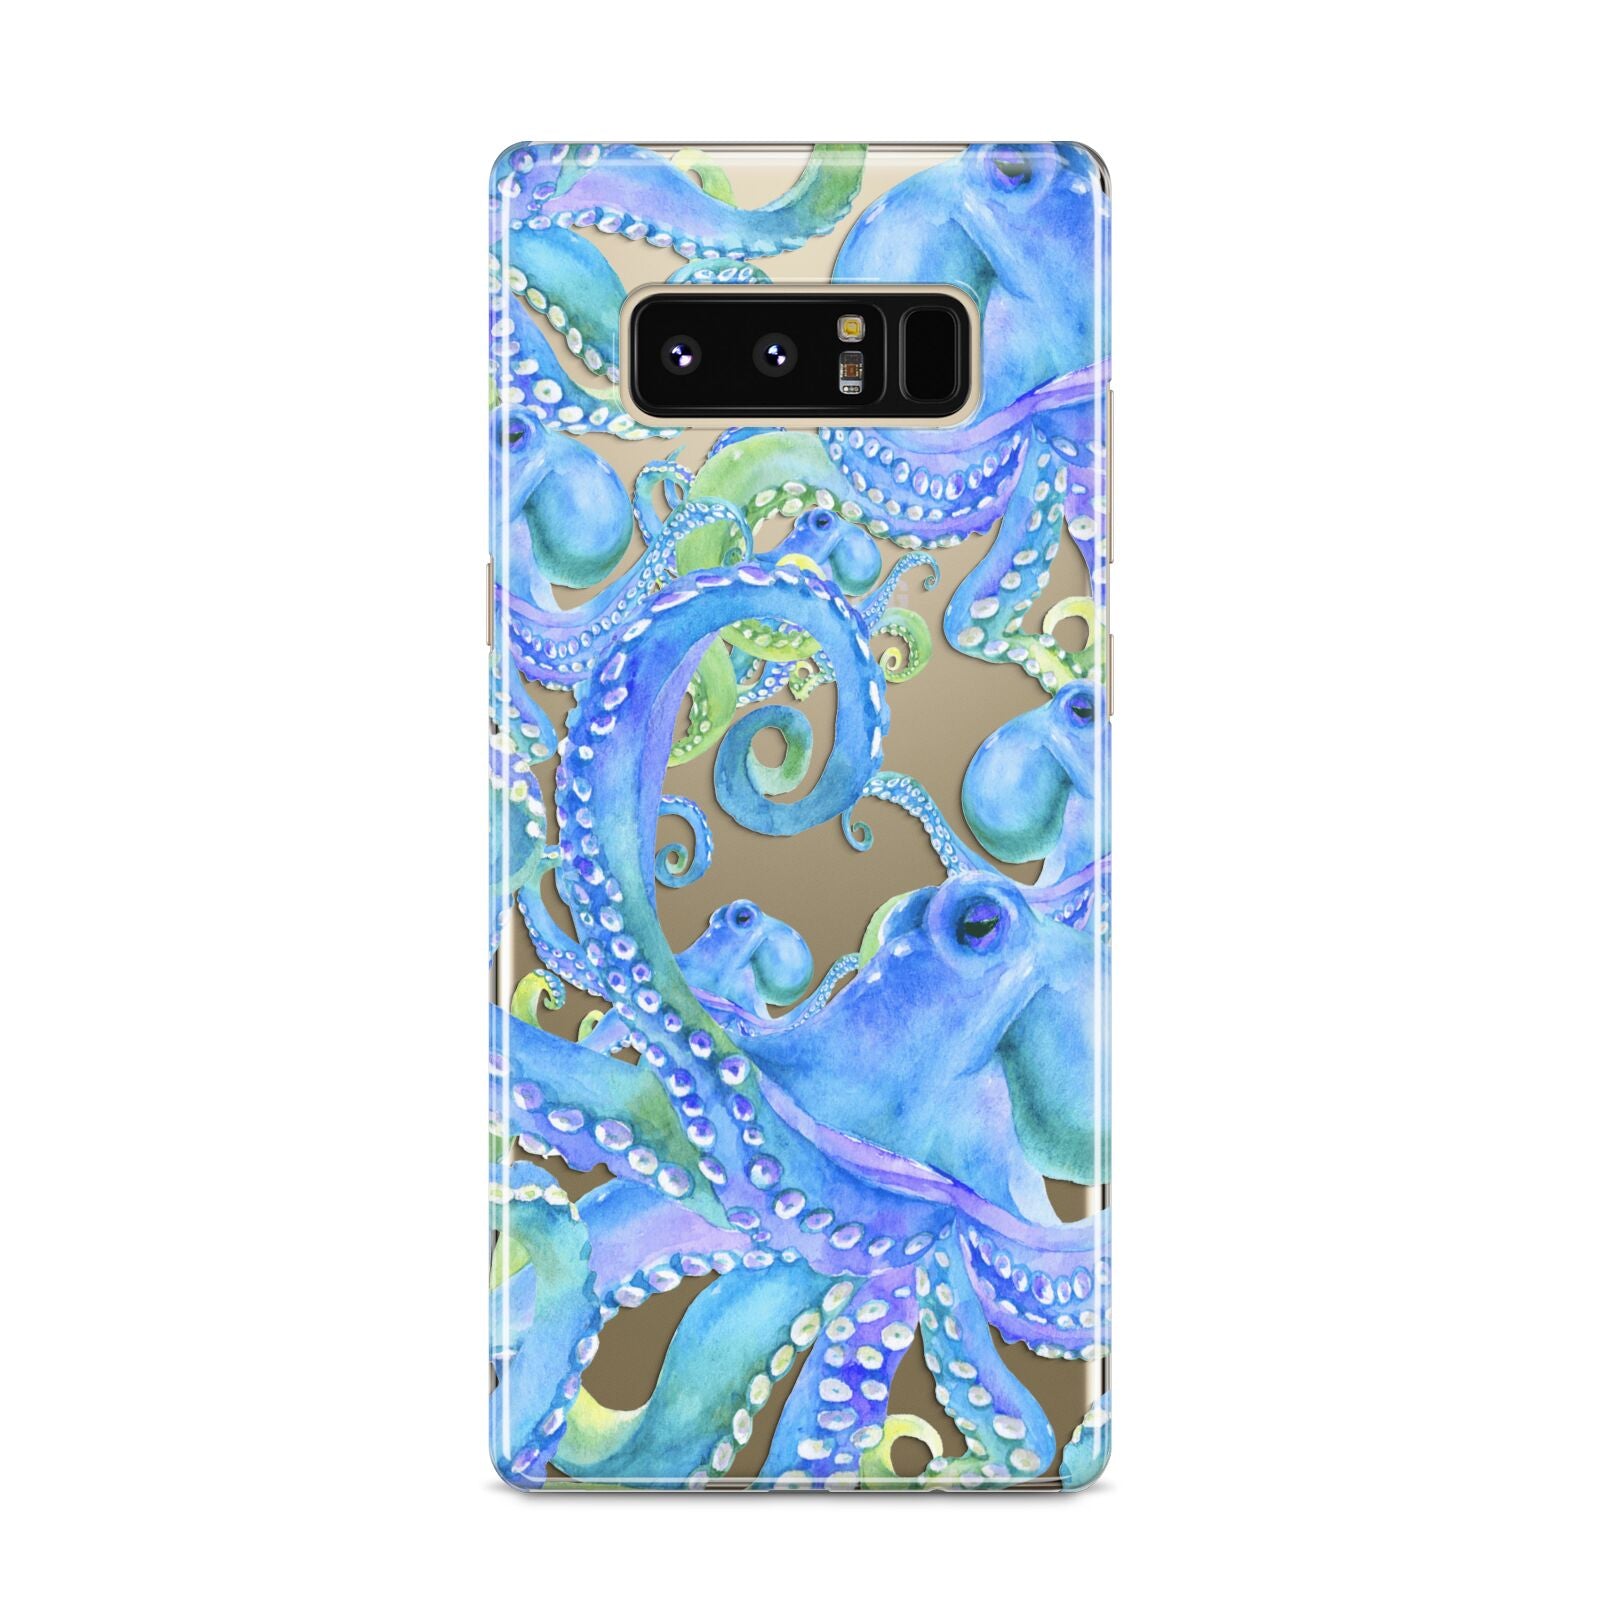 Octopus Samsung Galaxy S8 Case